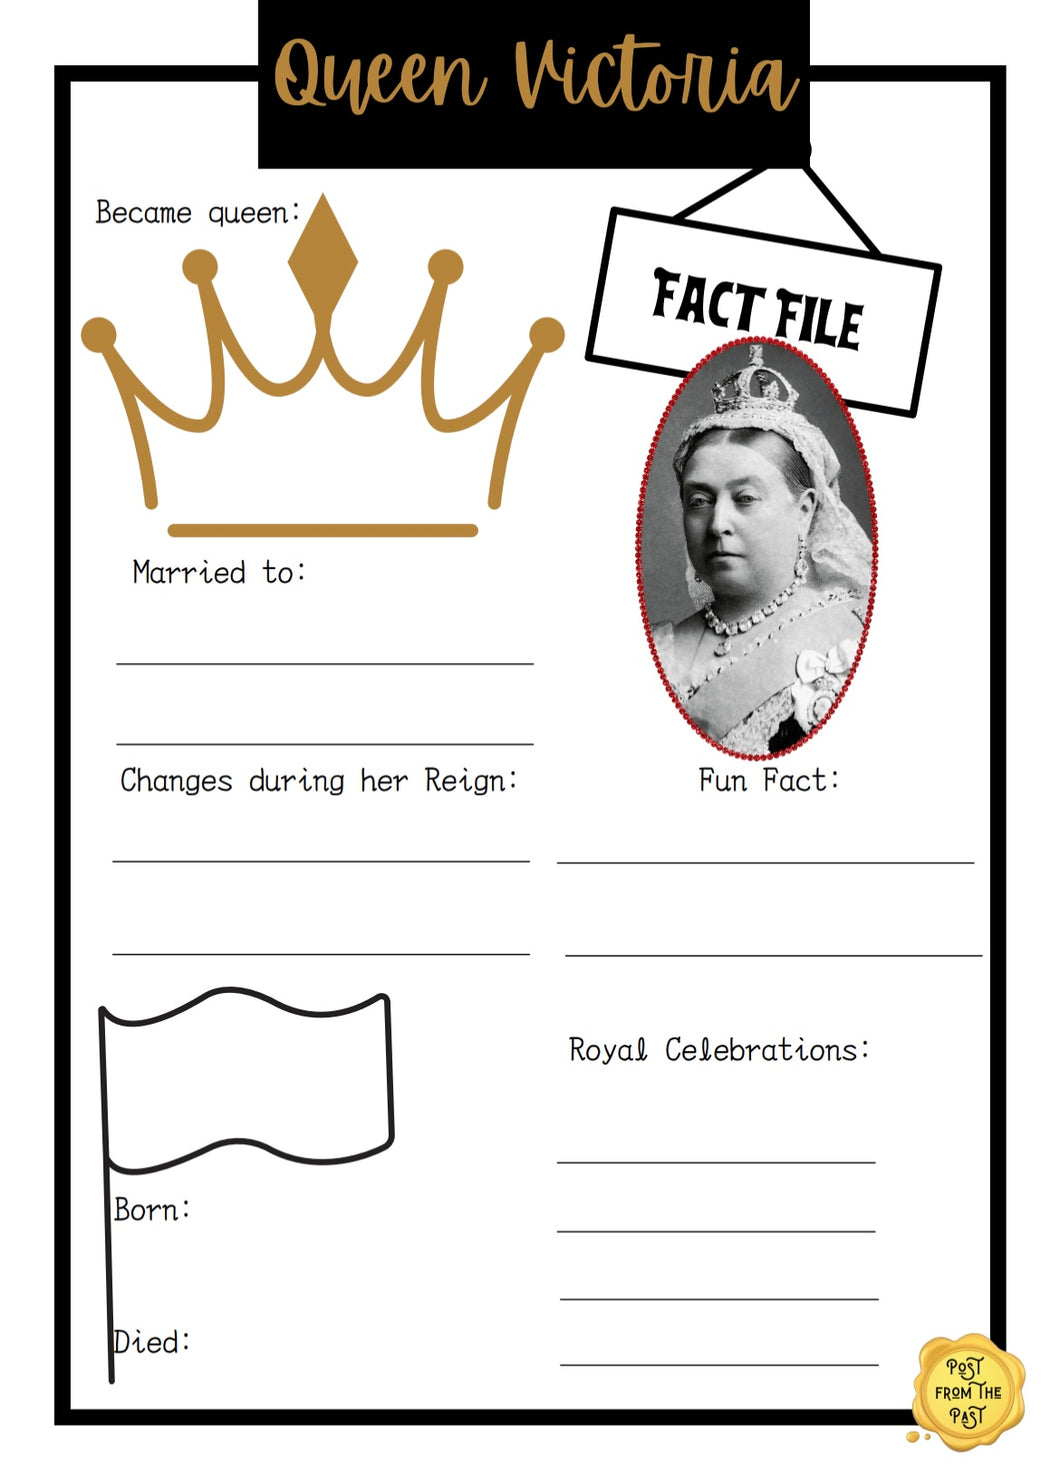 Queen Victoria Fact File